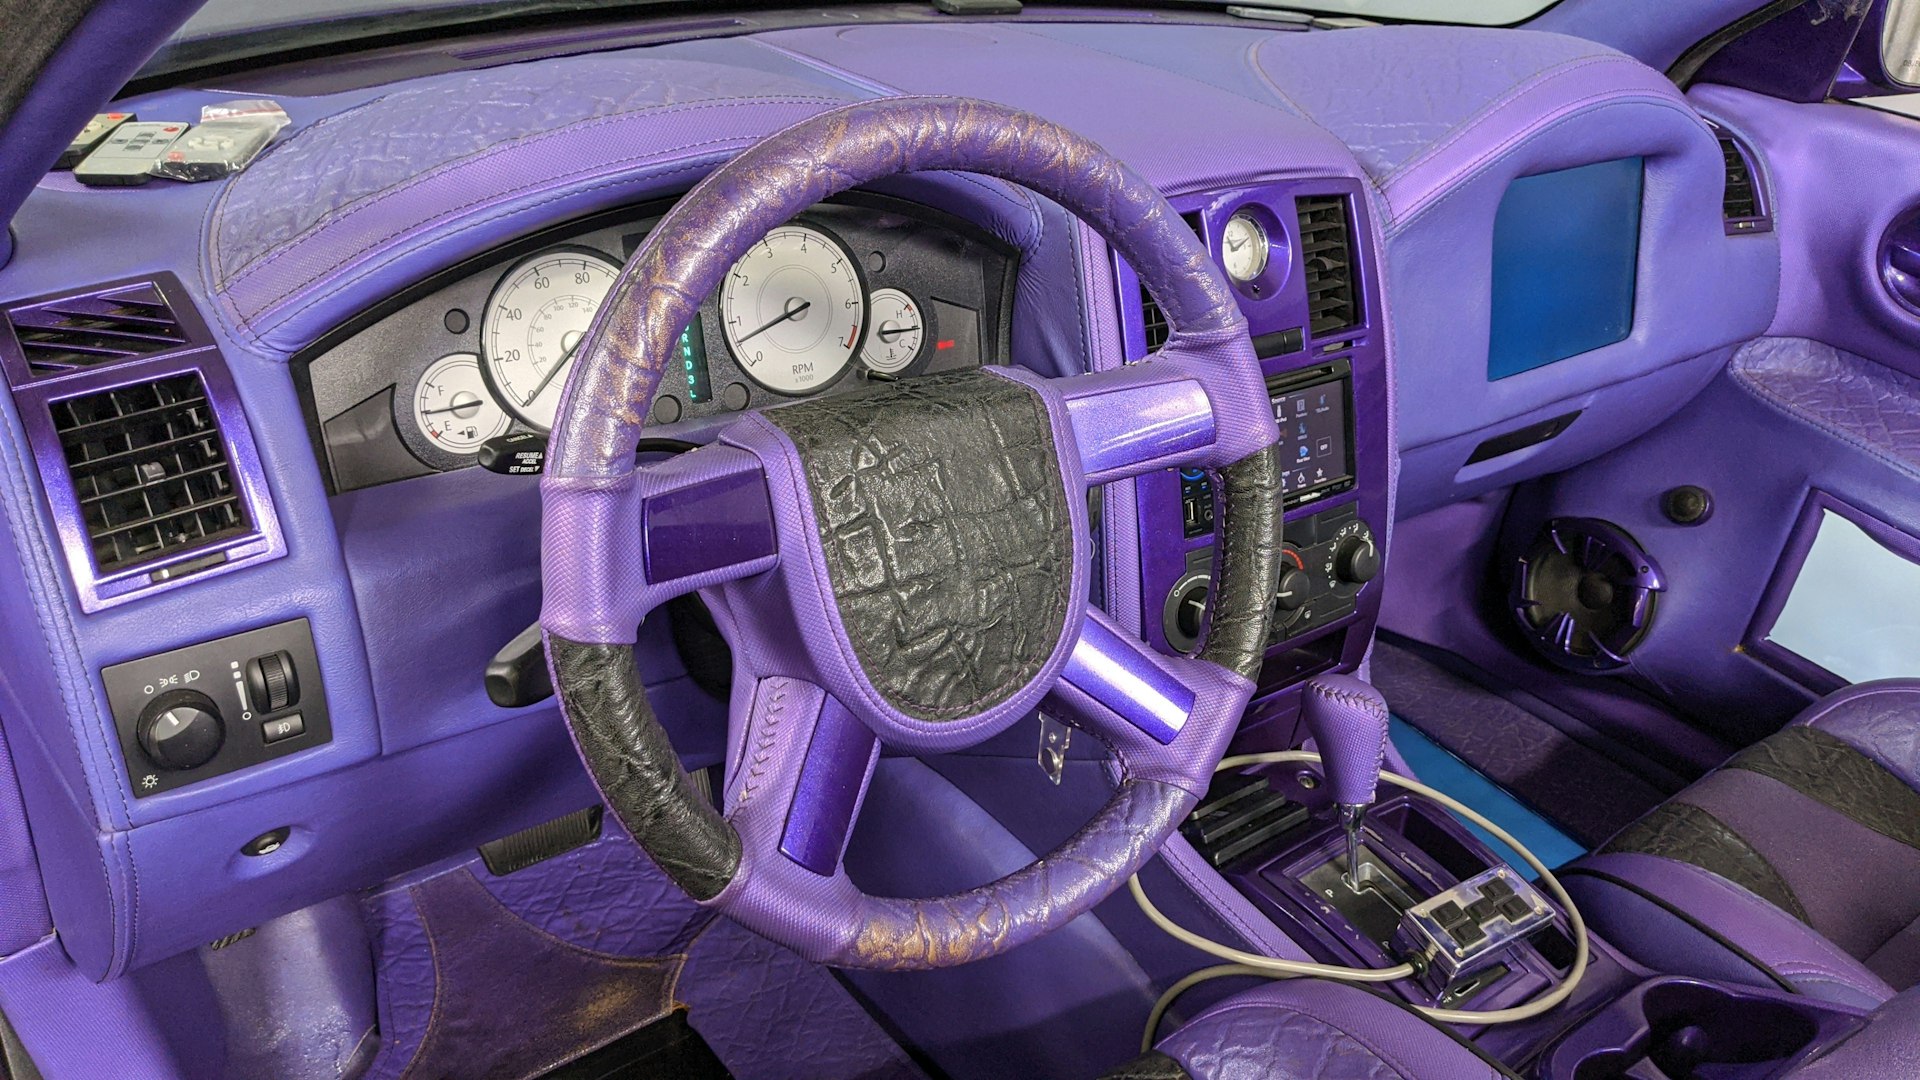 2005 dodge charger purple